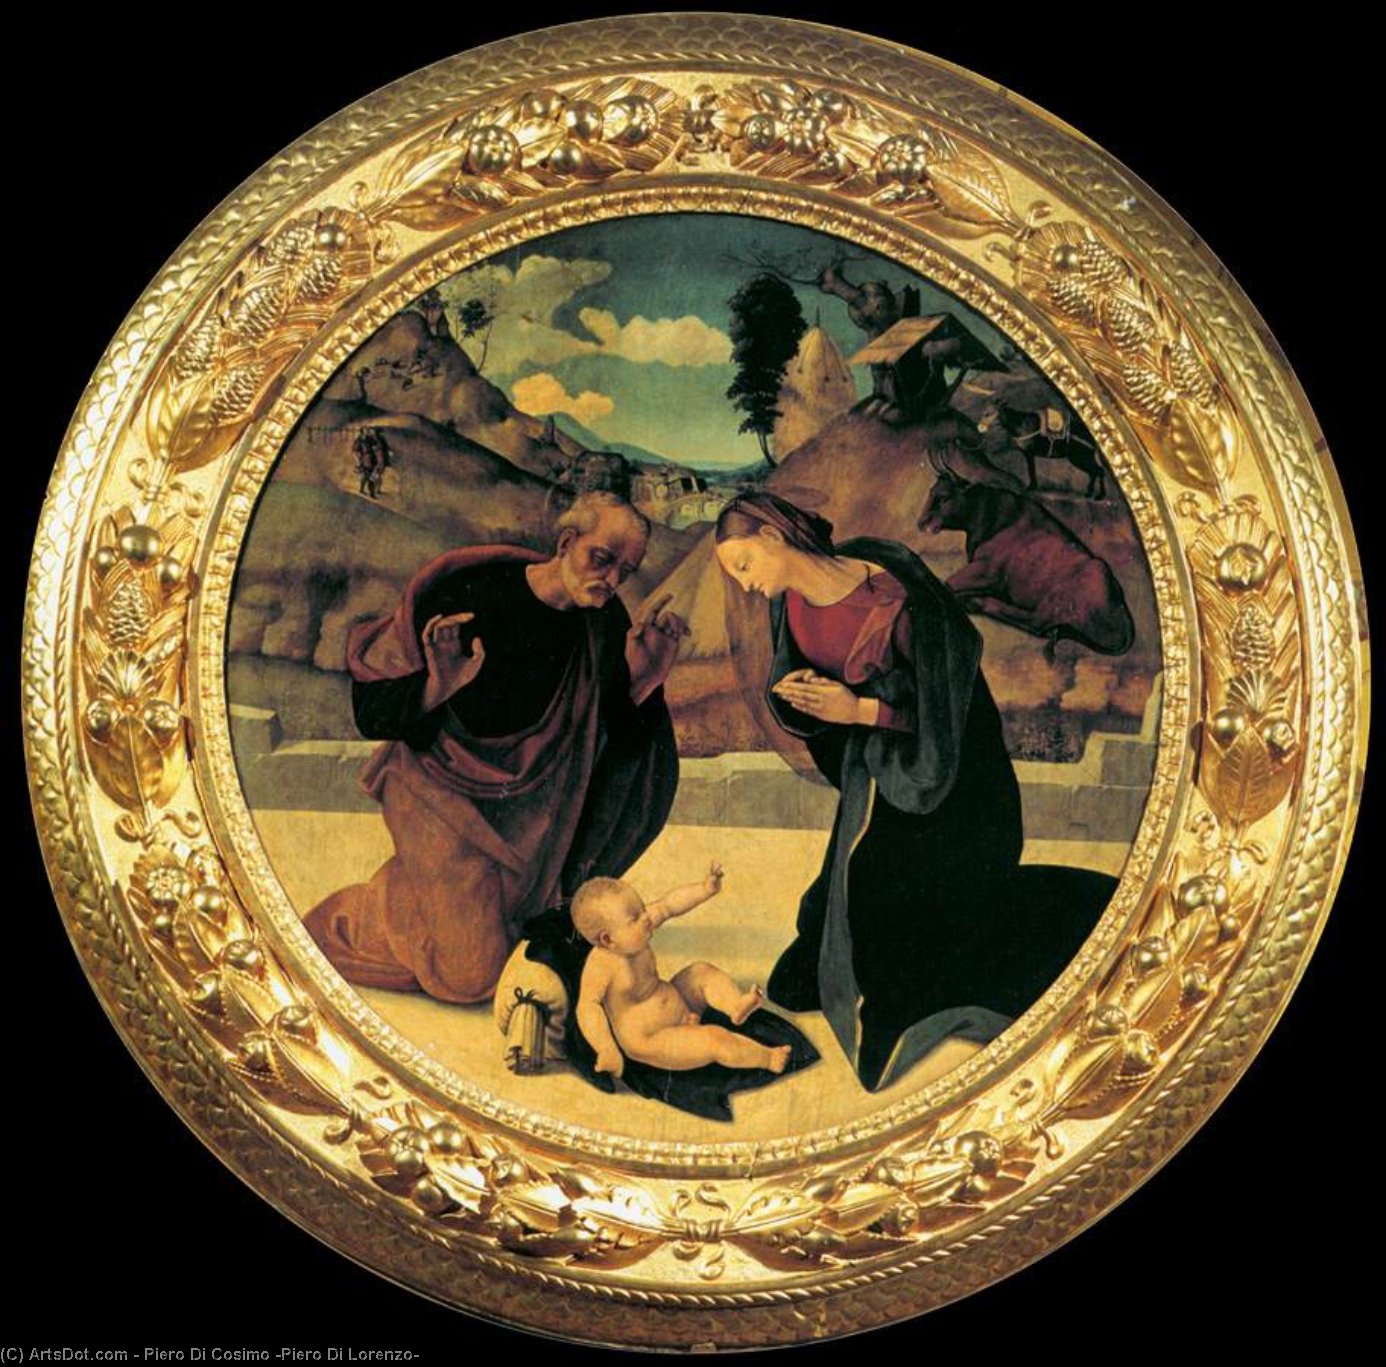 Acheter Reproductions D'art De Musée Adoration de l`enfant, 1510 de Piero Di Cosimo (Piero Di Lorenzo) (1462-1522, Italy) | ArtsDot.com